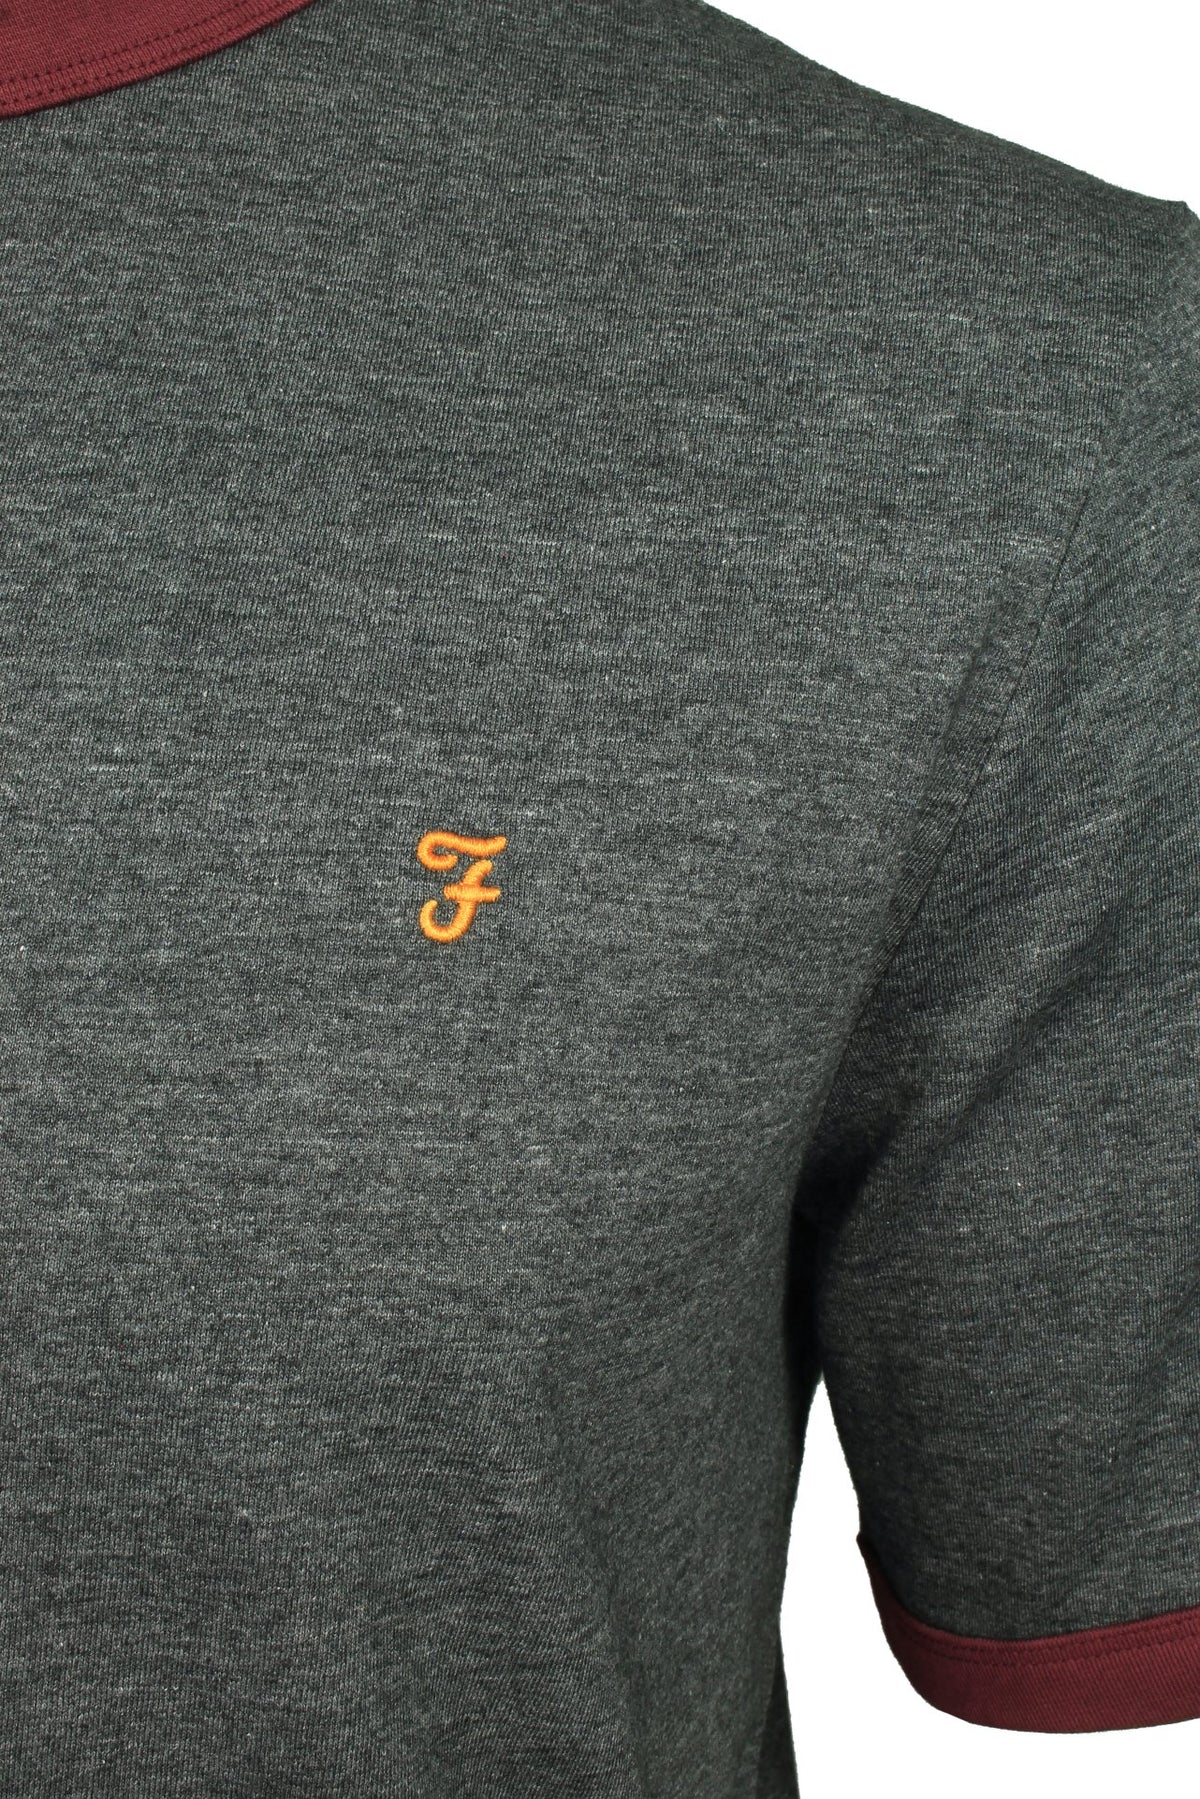 Farah Mens Ringer Short Sleeve T-Shirt, 02, F4Kfd041, Farah Grey Marl